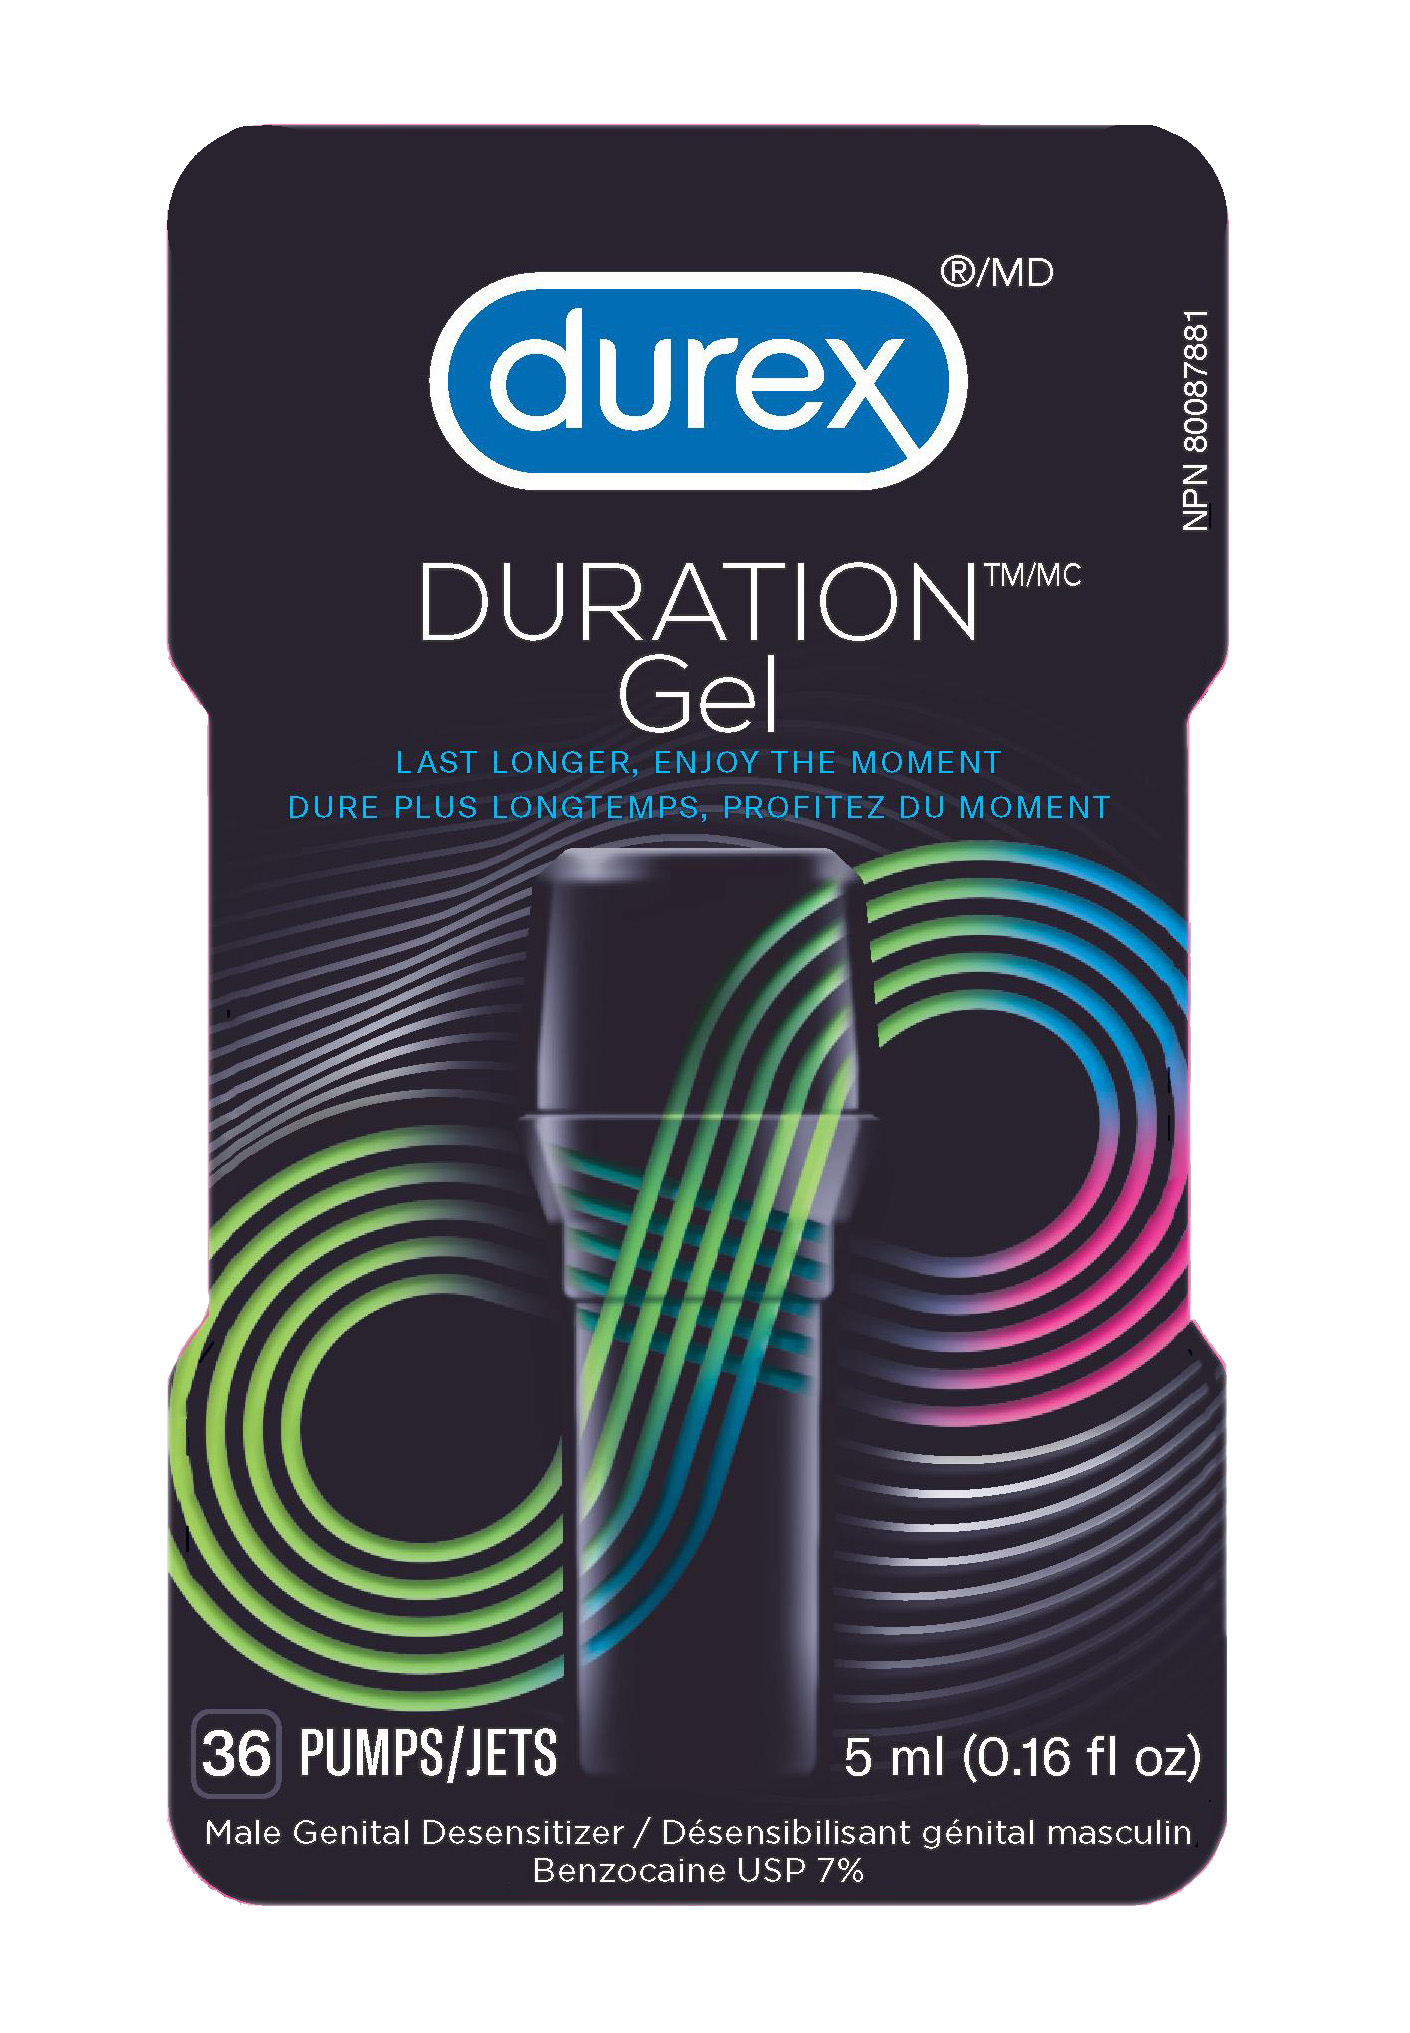 DUREX Duration Gel Lubricant Canada